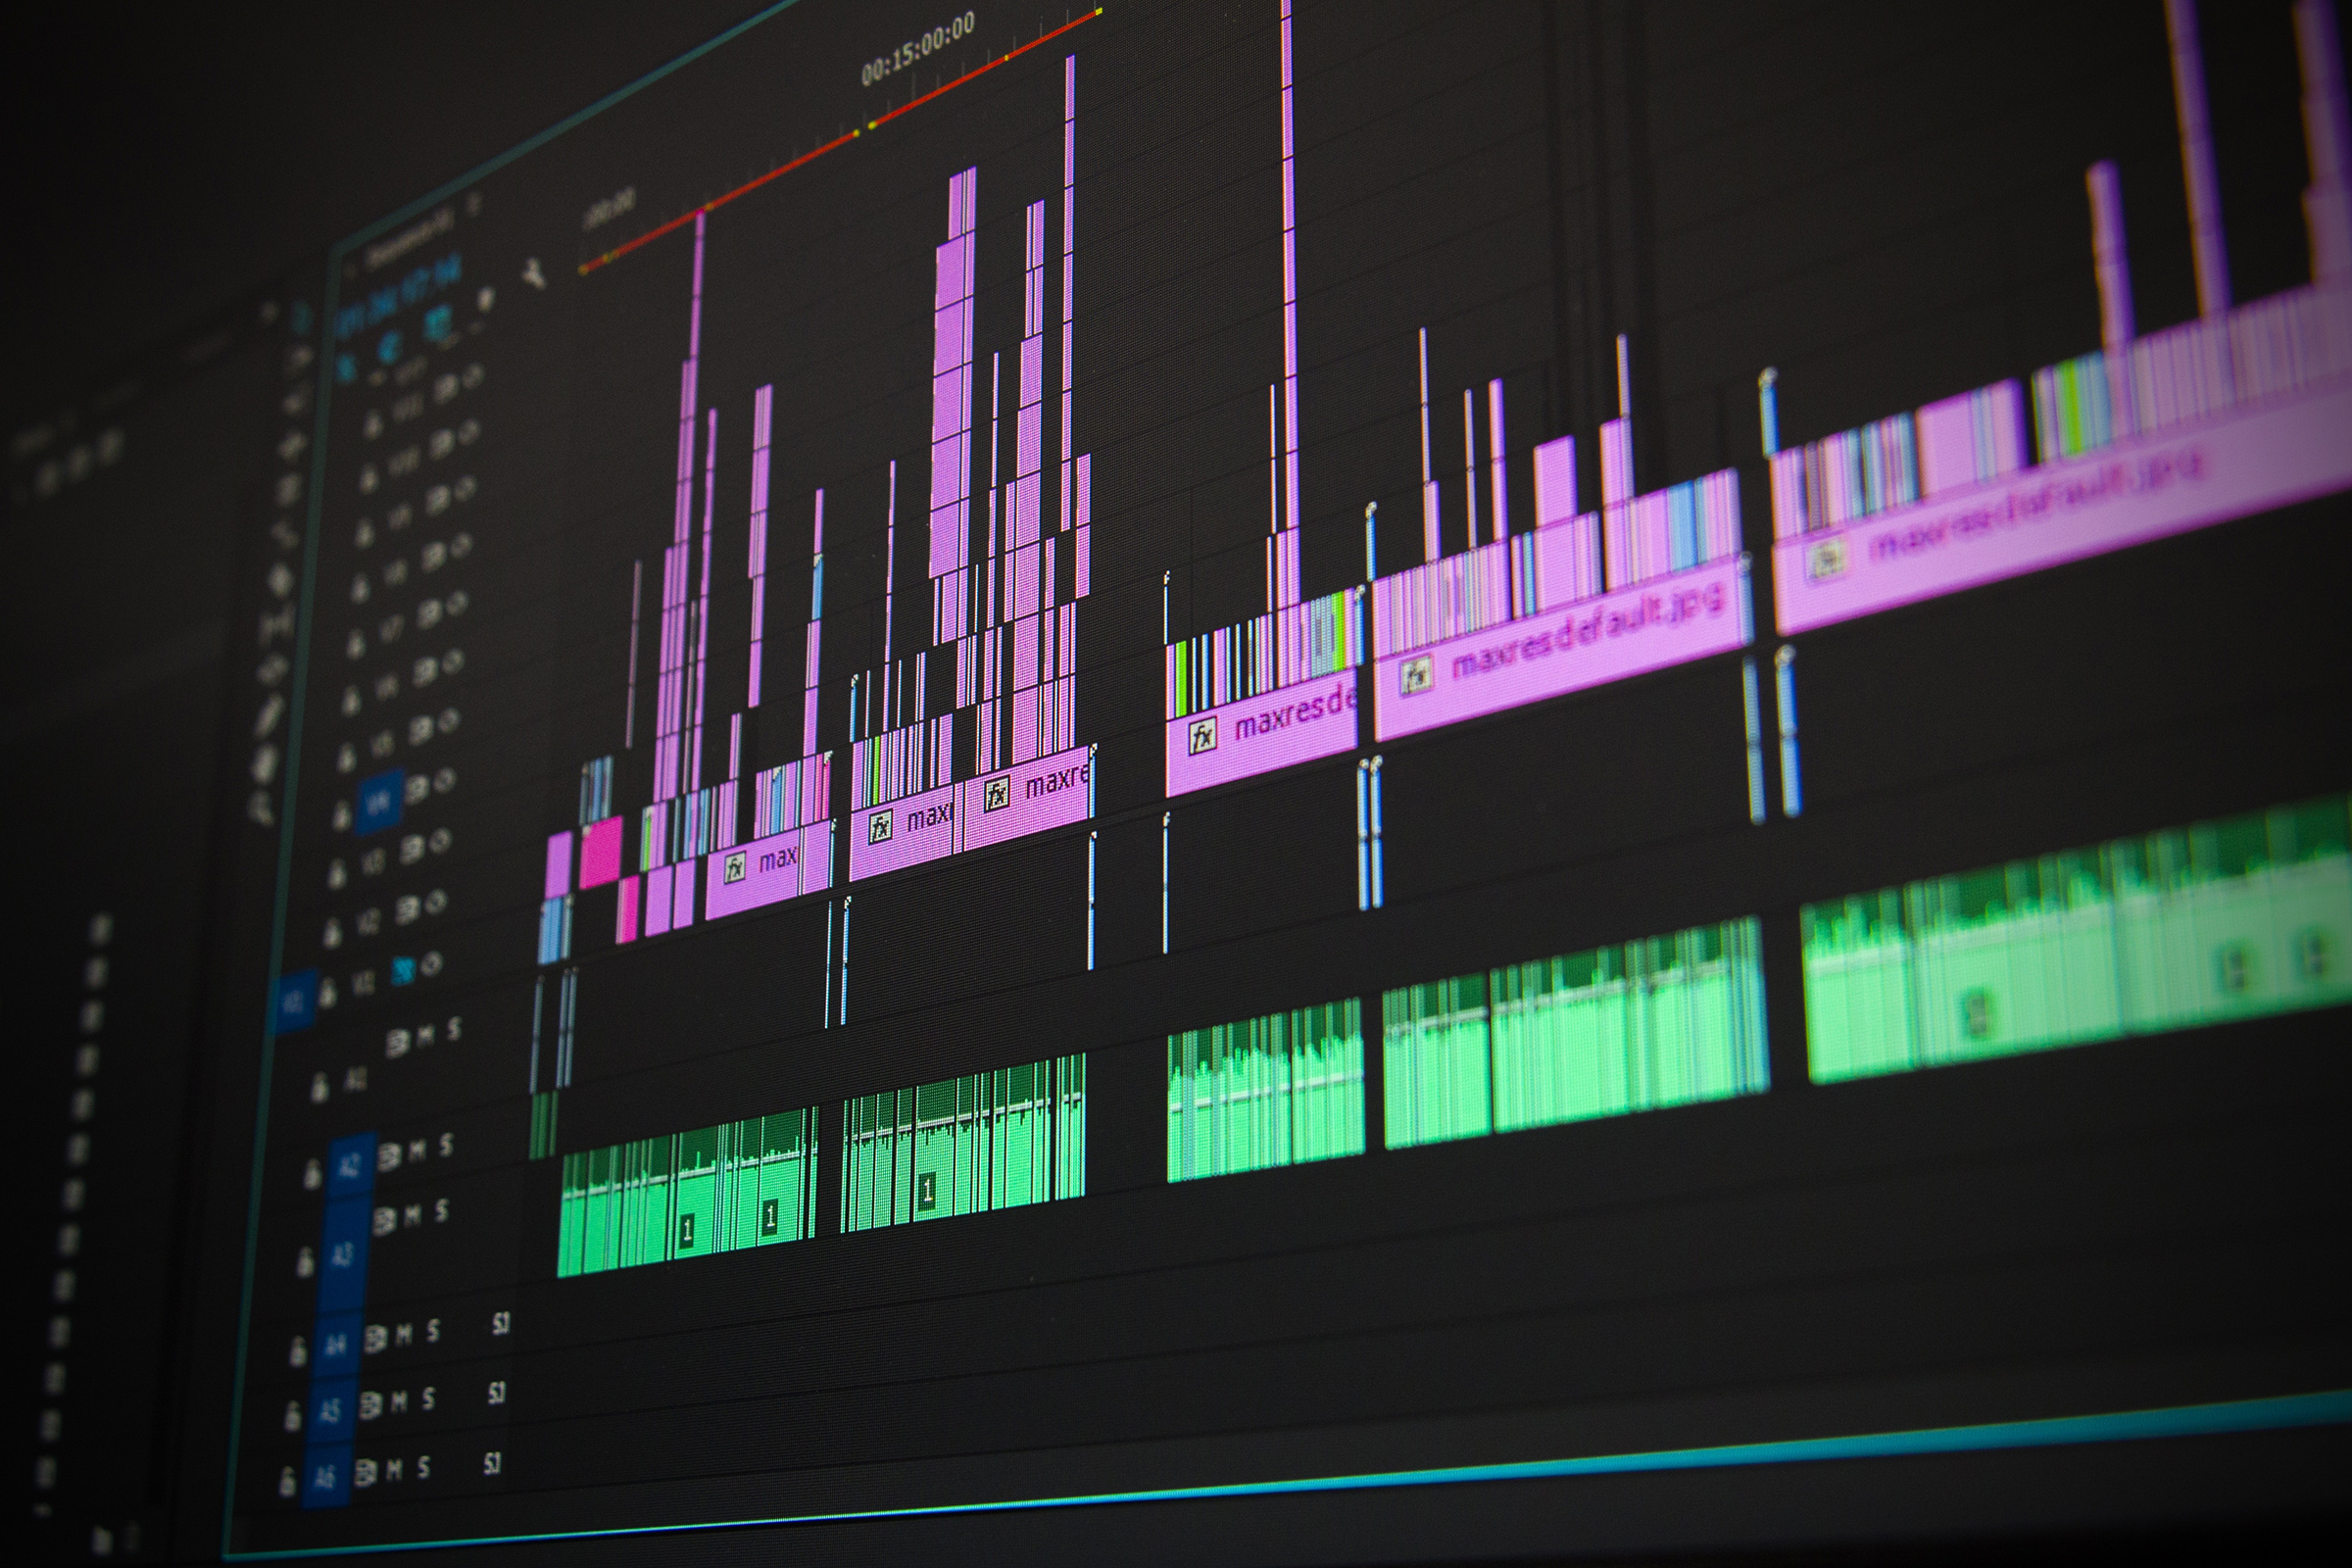 Adobe Premiere Pro timeline interface